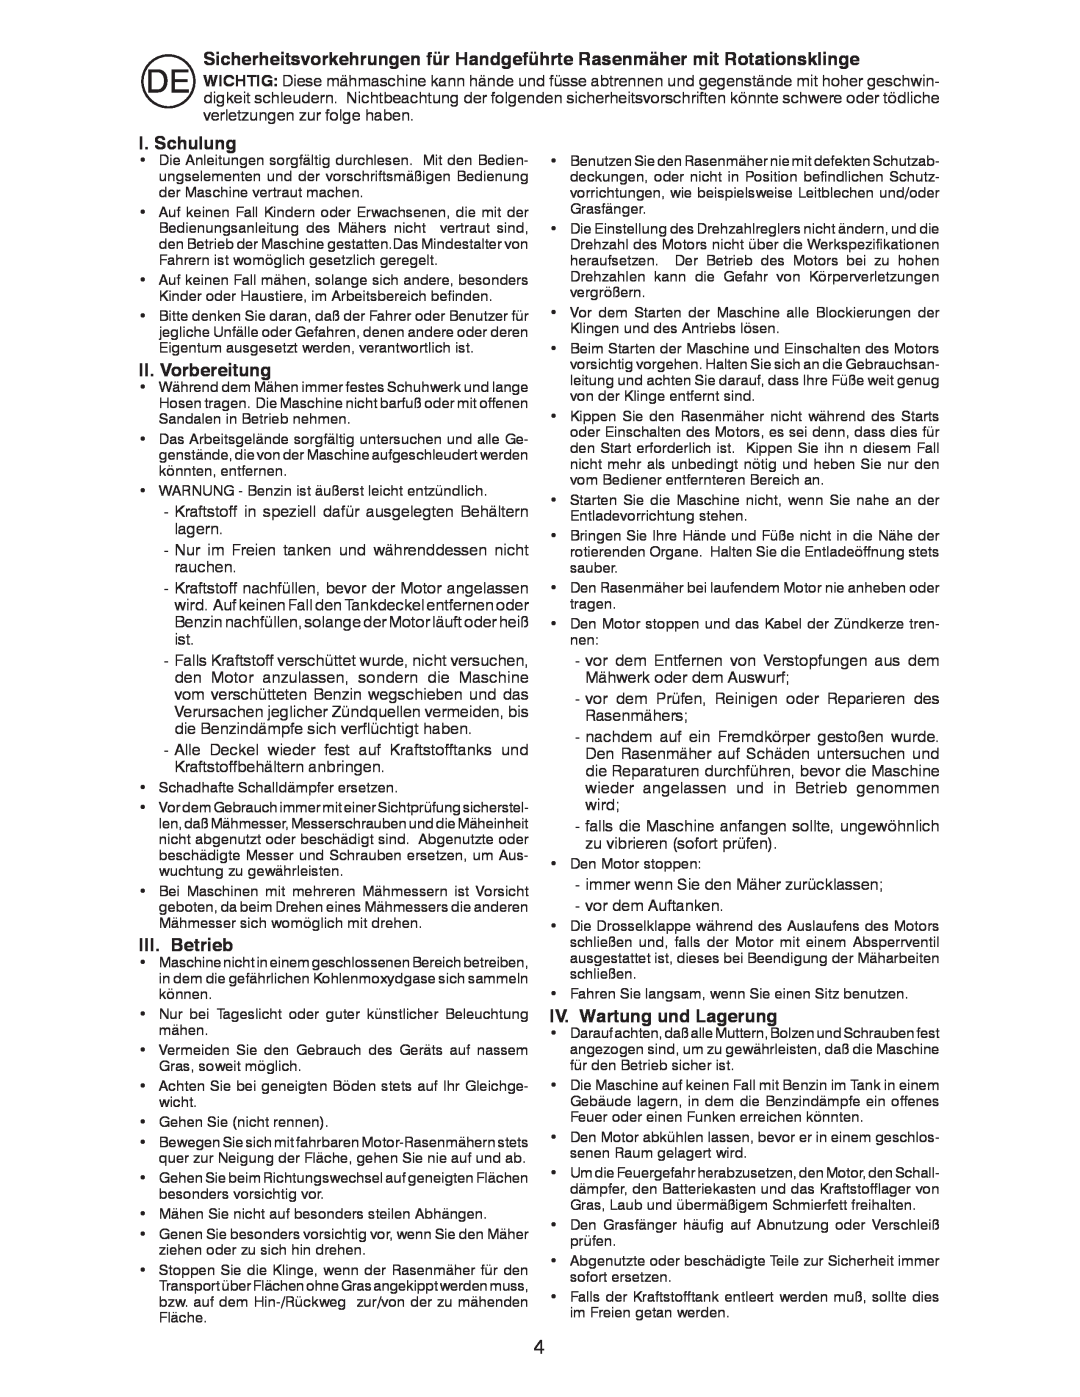 Husqvarna R52SVL instruction manual I. Schulung, II. Vorbereitung, III. Betrieb, IV. Wartung und Lagerung 